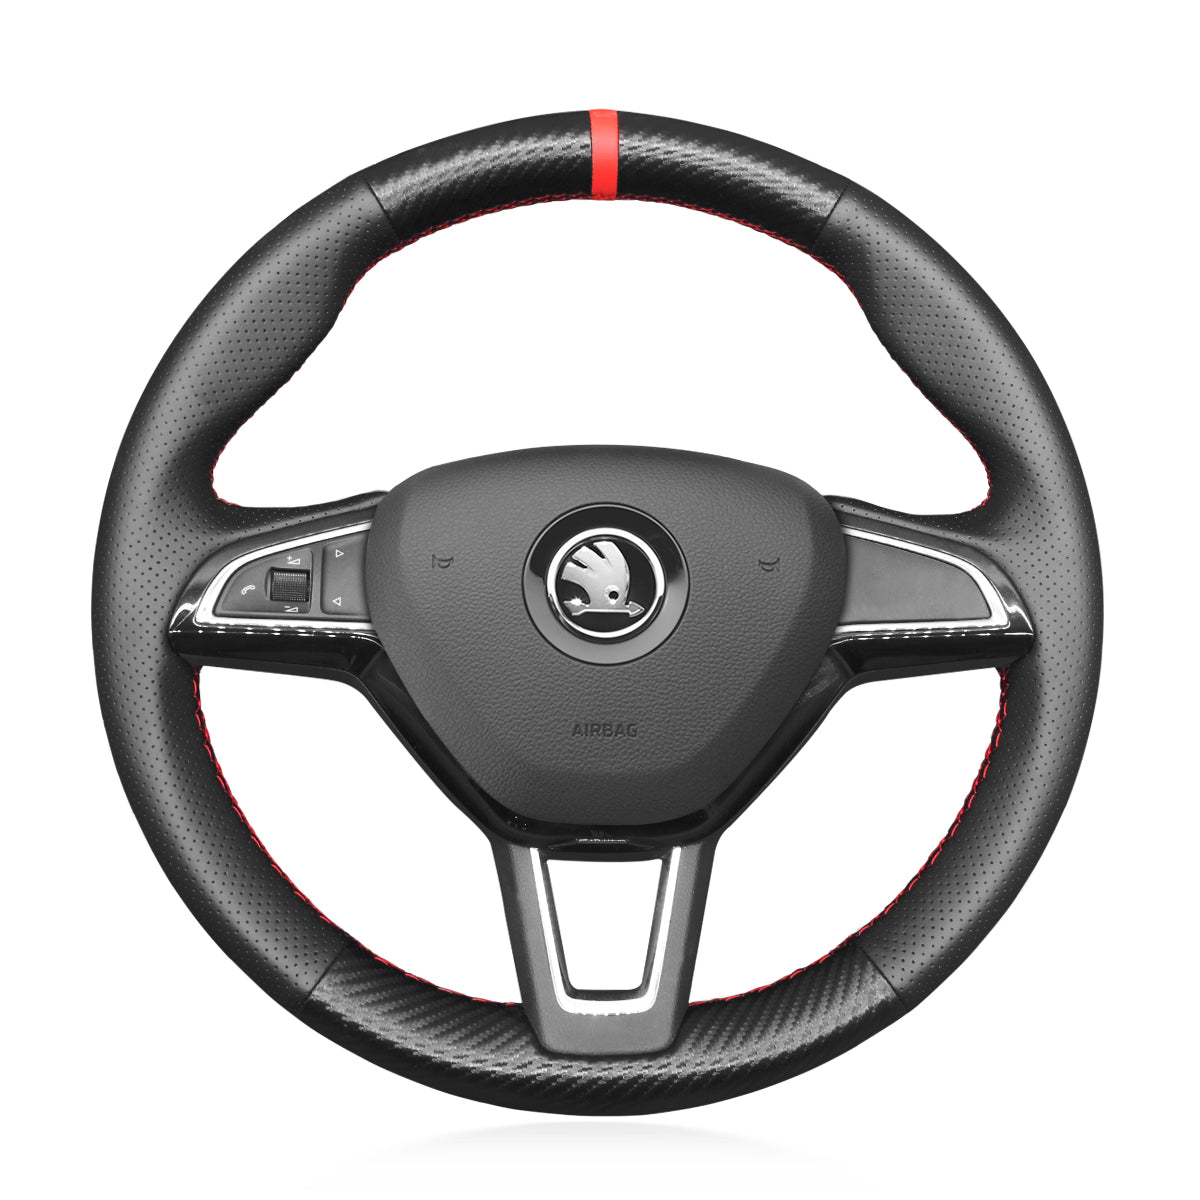 MEWANT DIY Black Suede Leather Carbon Fiber Car Steering Wheel Cover for Skoda Citigo Fabia Karoq Roomster Octavia Superb Yeti Kodiaq Scala